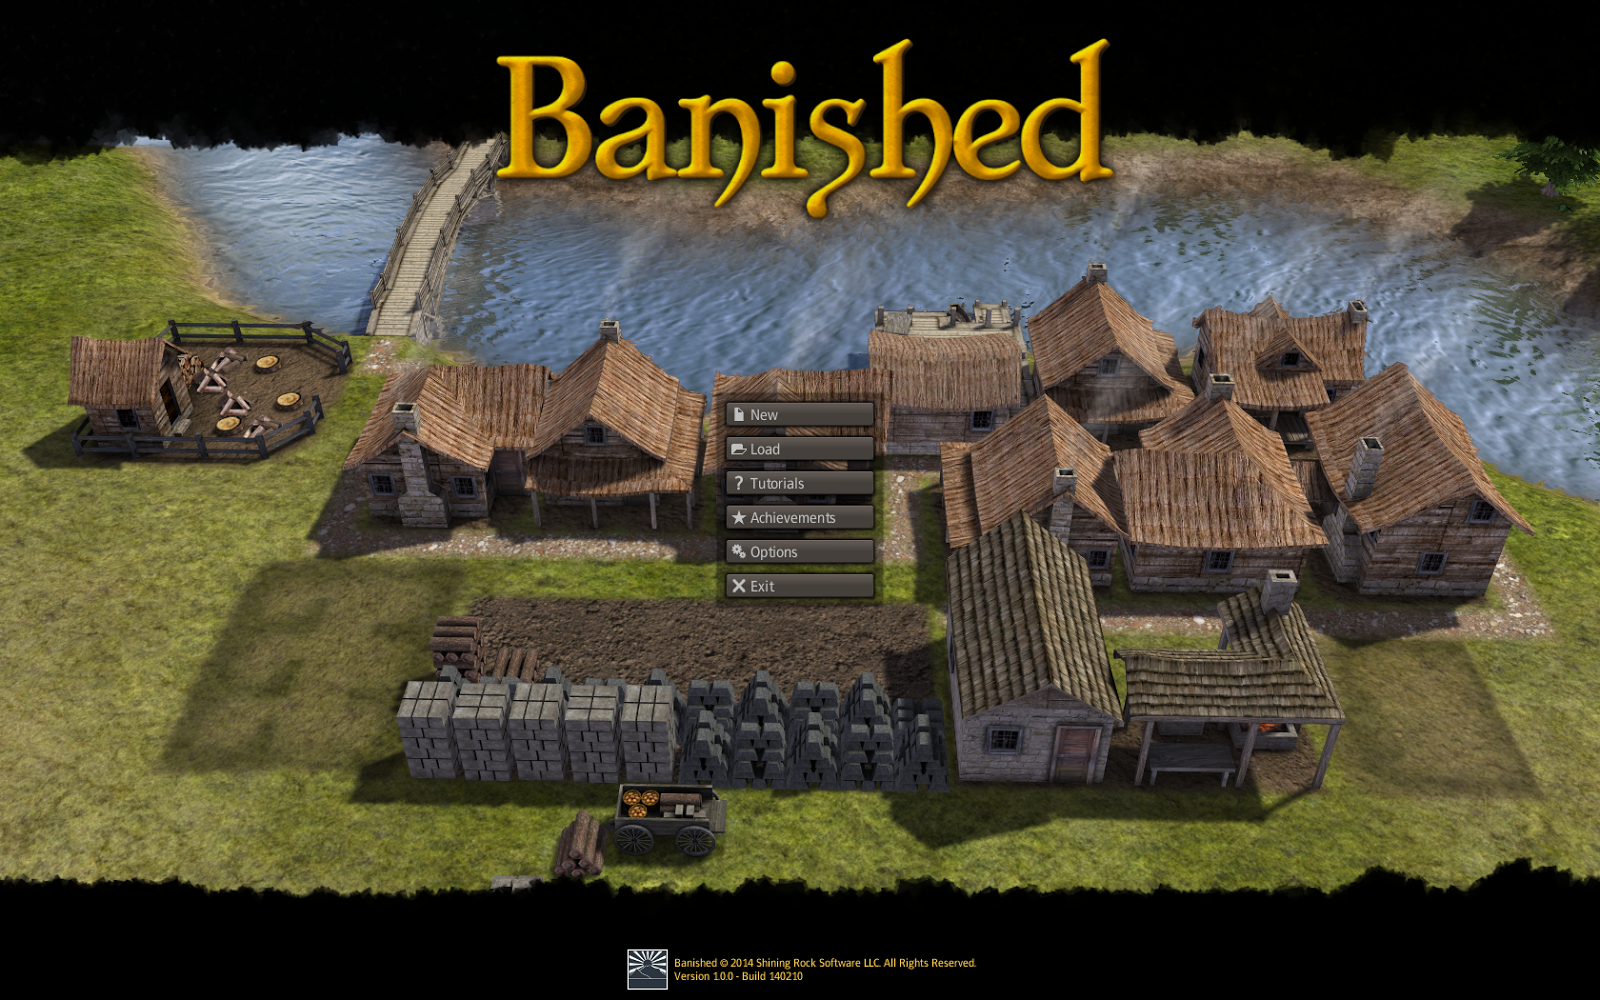 Banished - Free Download PC Game (Full Version)